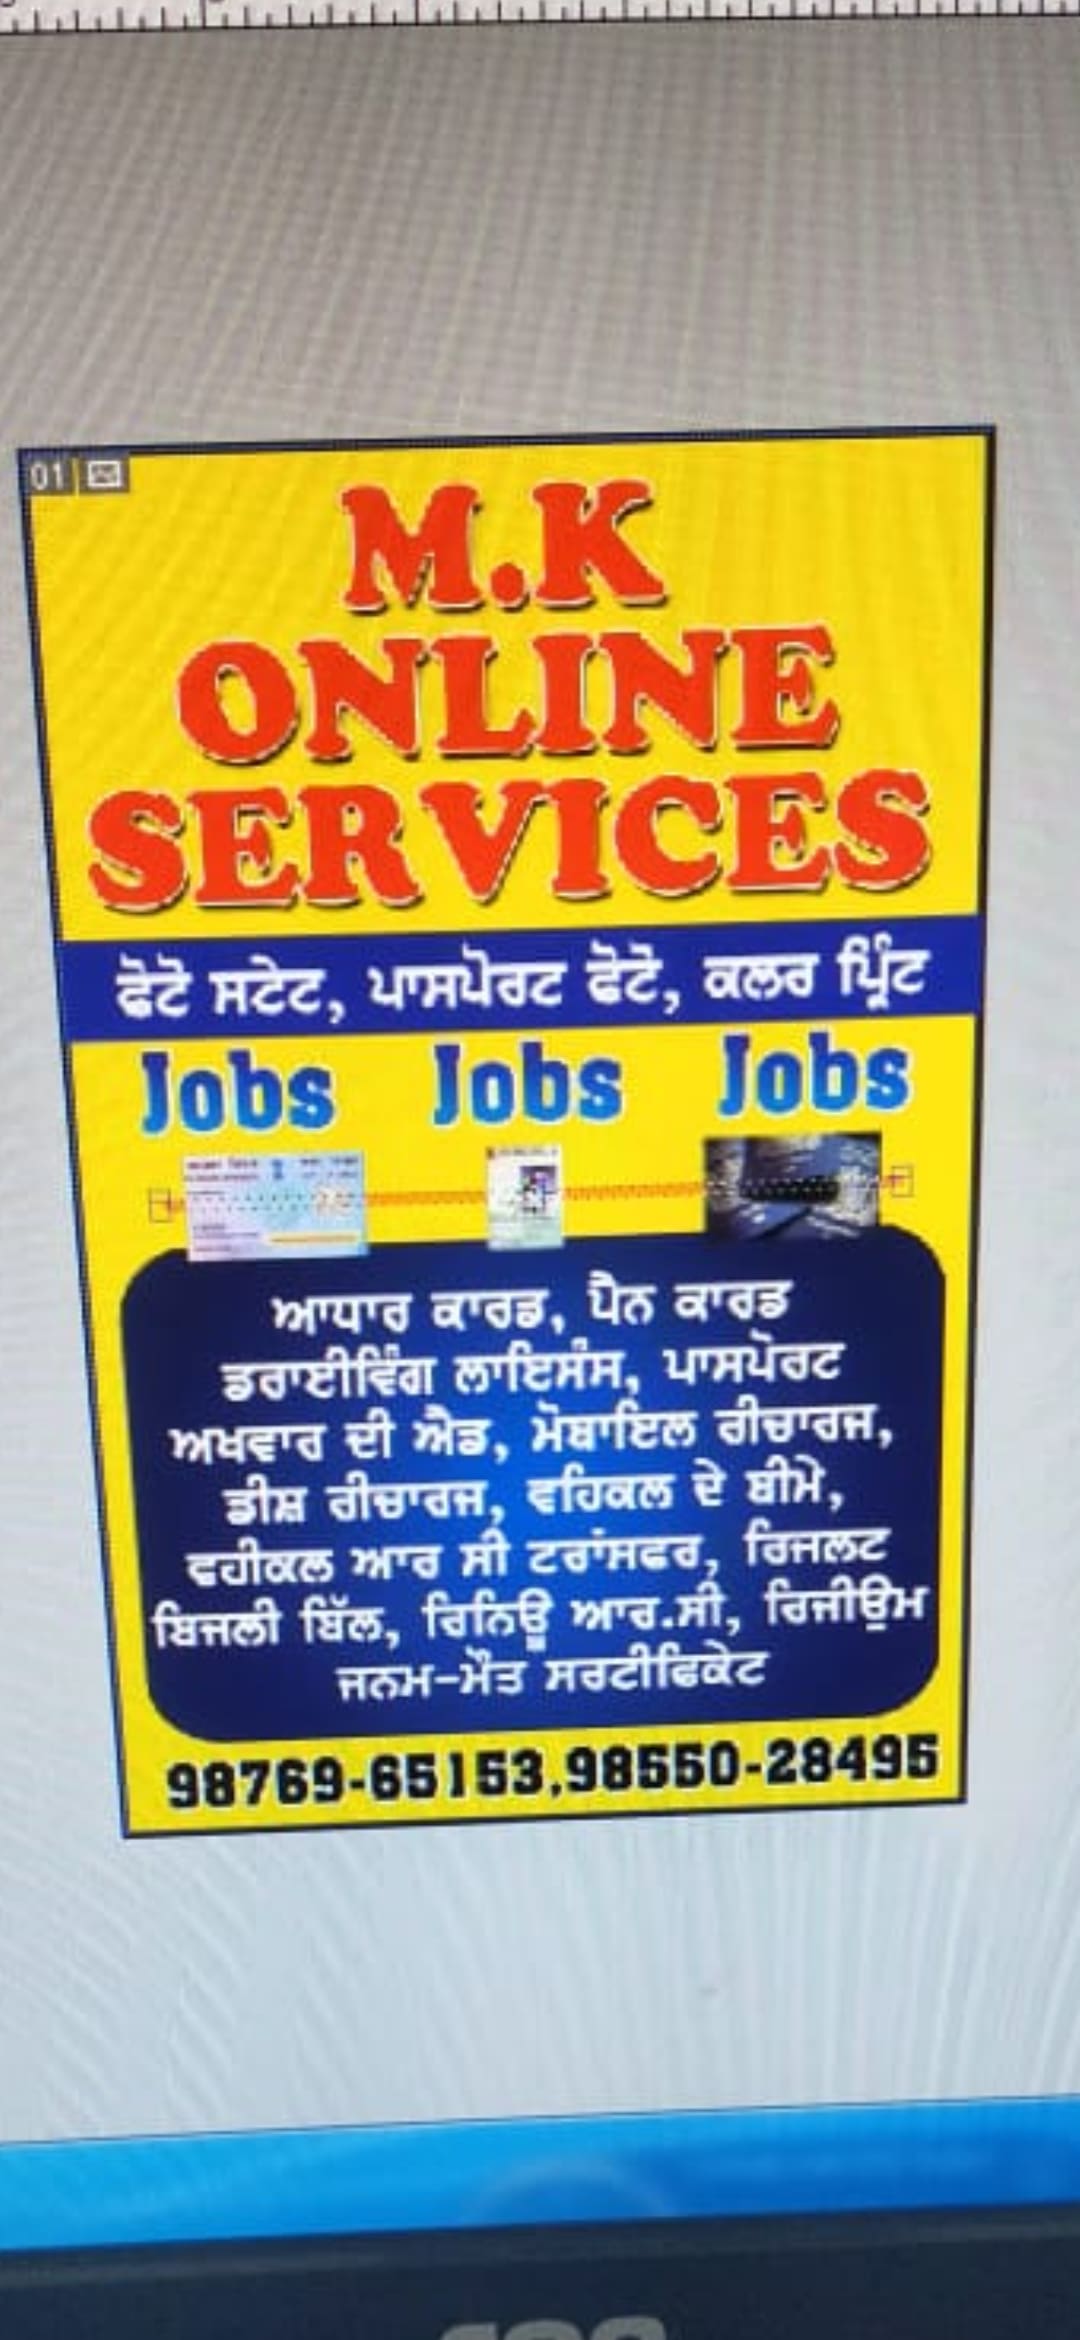 Goyal Online Services